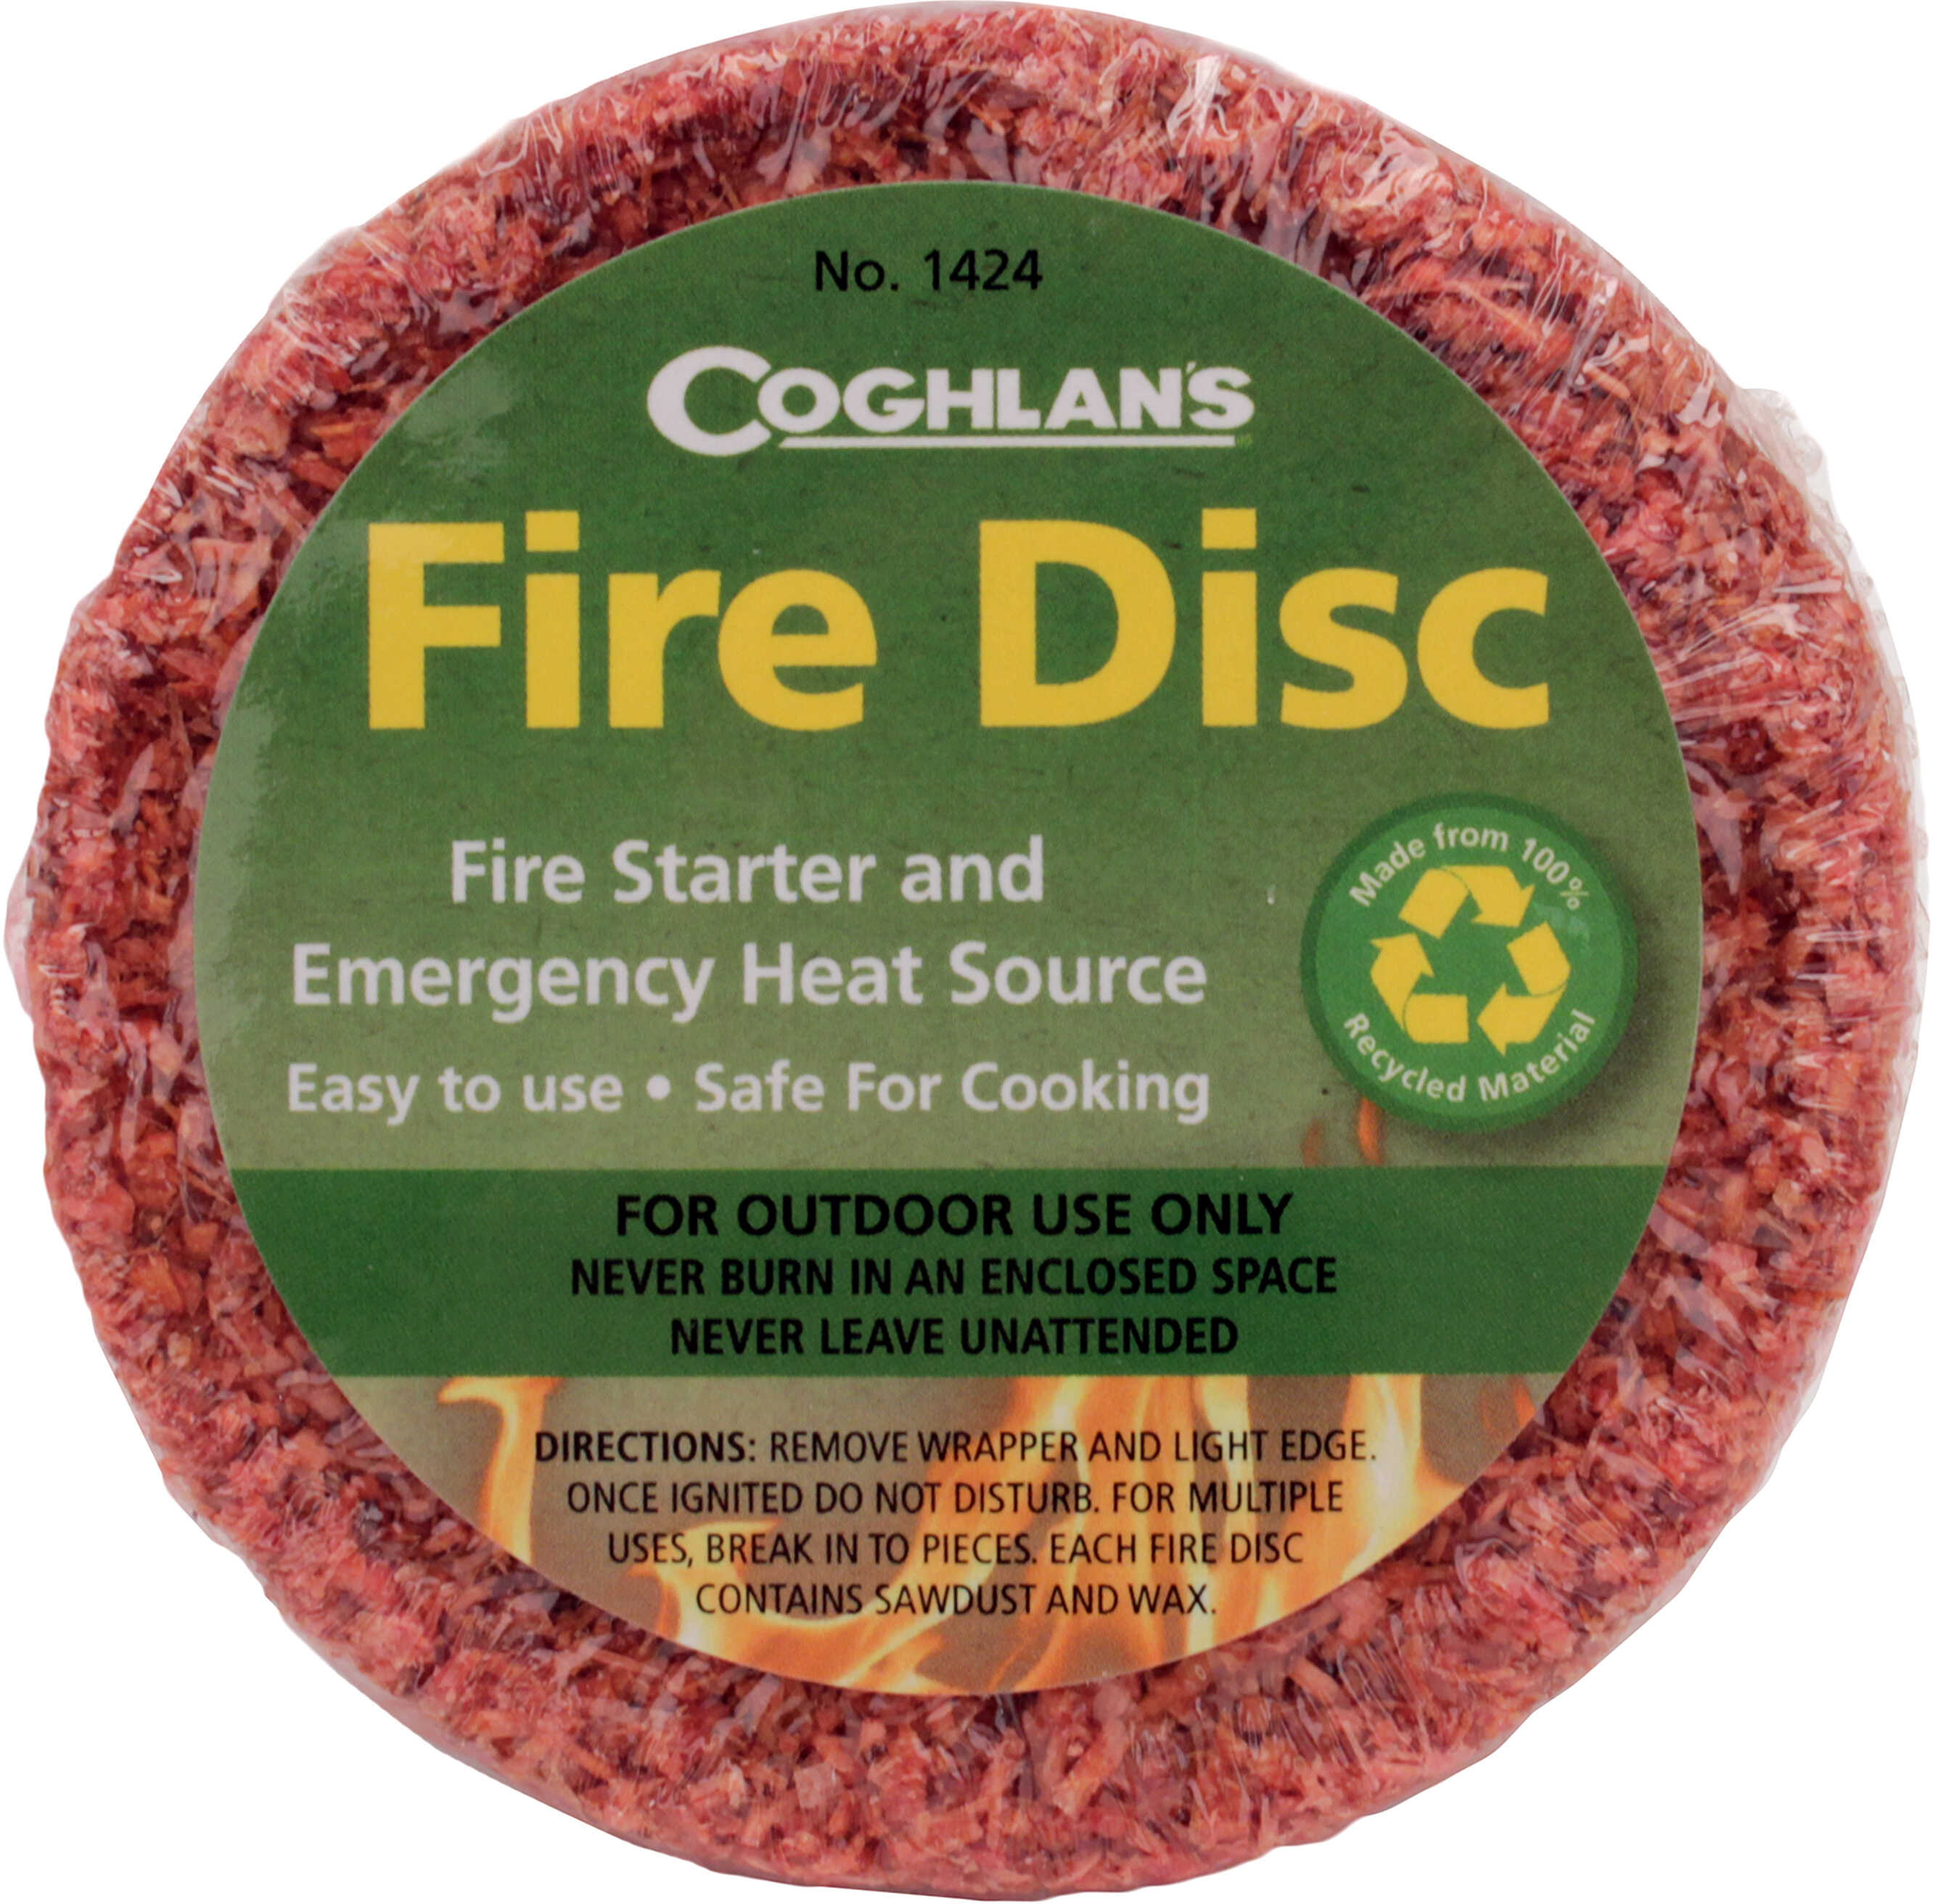 Coghlans Fire Disc Display 24 Units Md: 1424